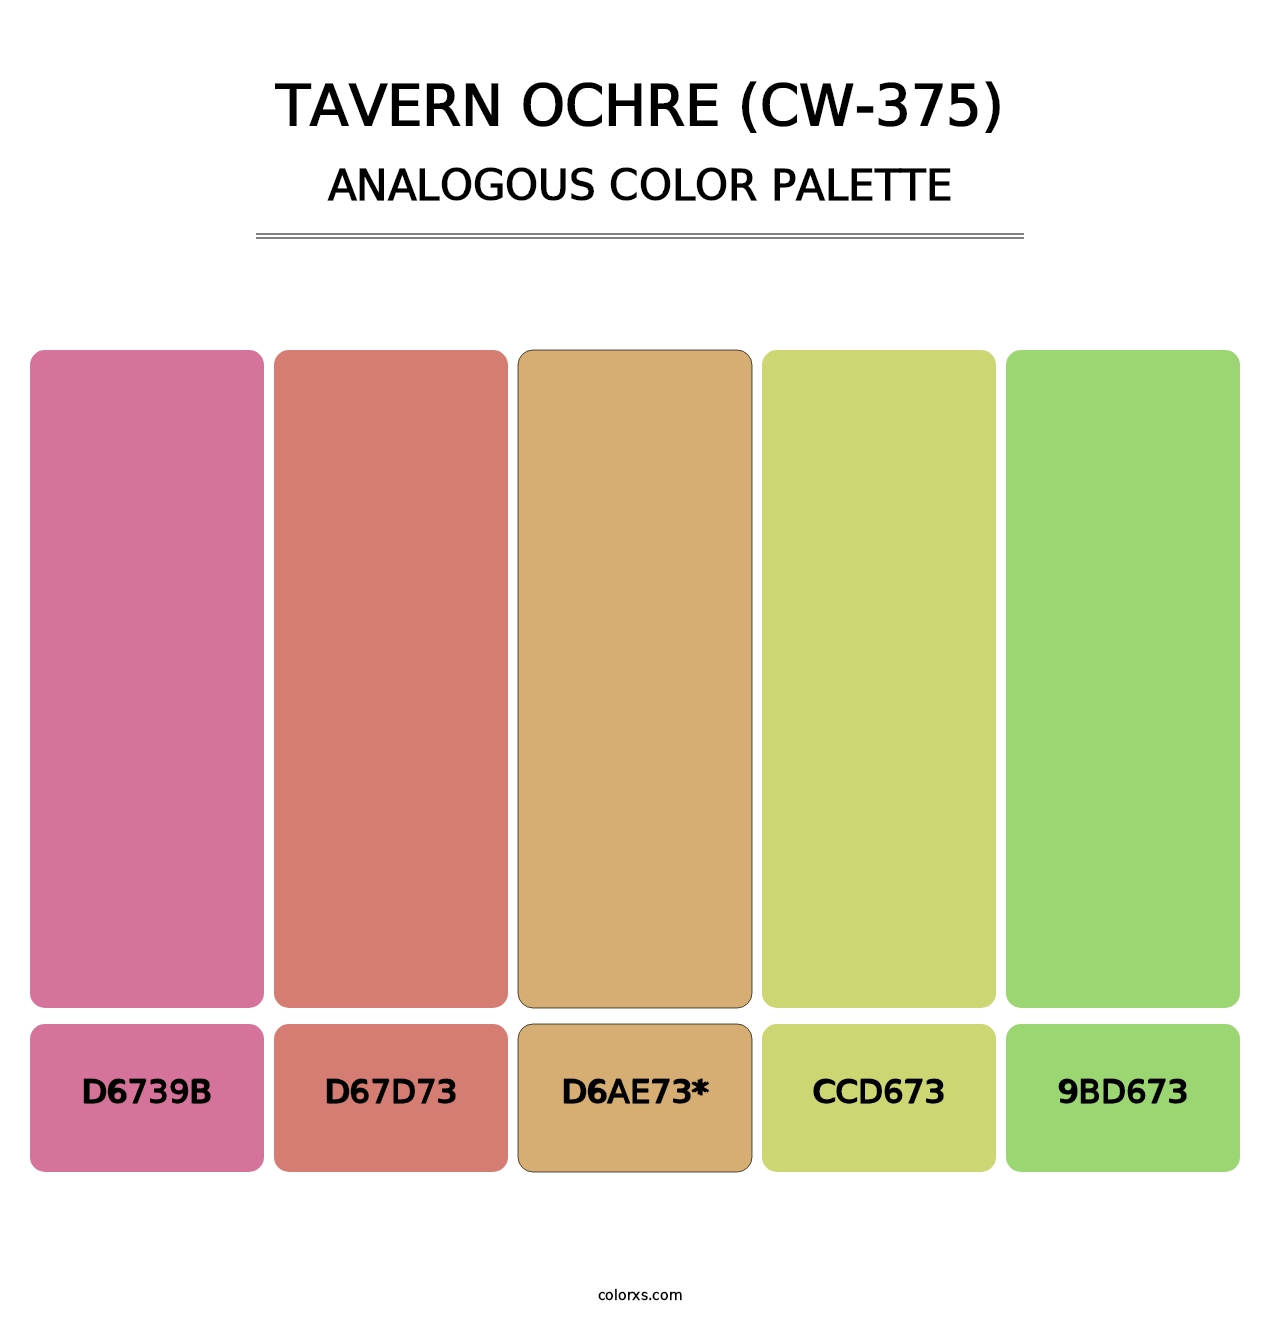 Tavern Ochre (CW-375) - Analogous Color Palette